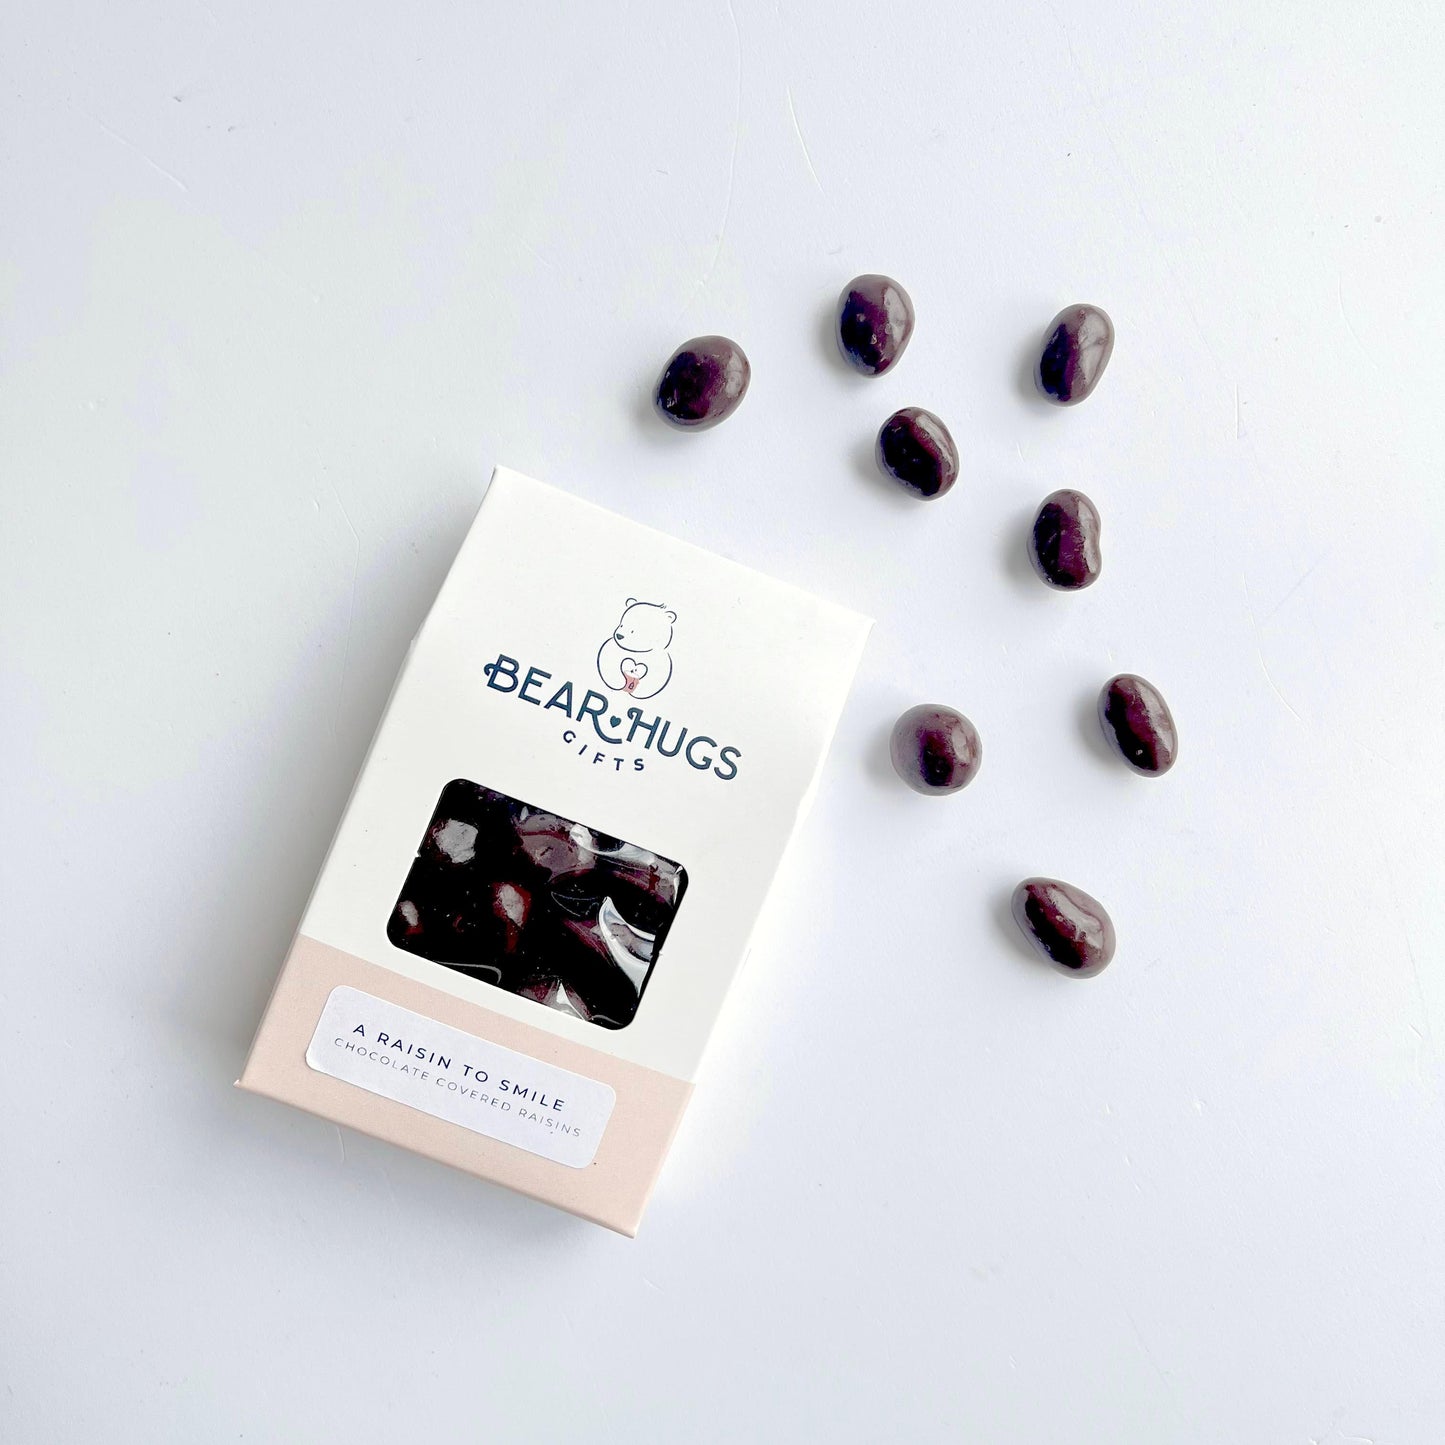 A Raisin To Smile: Chocolate Covered Raisins - BearHugs